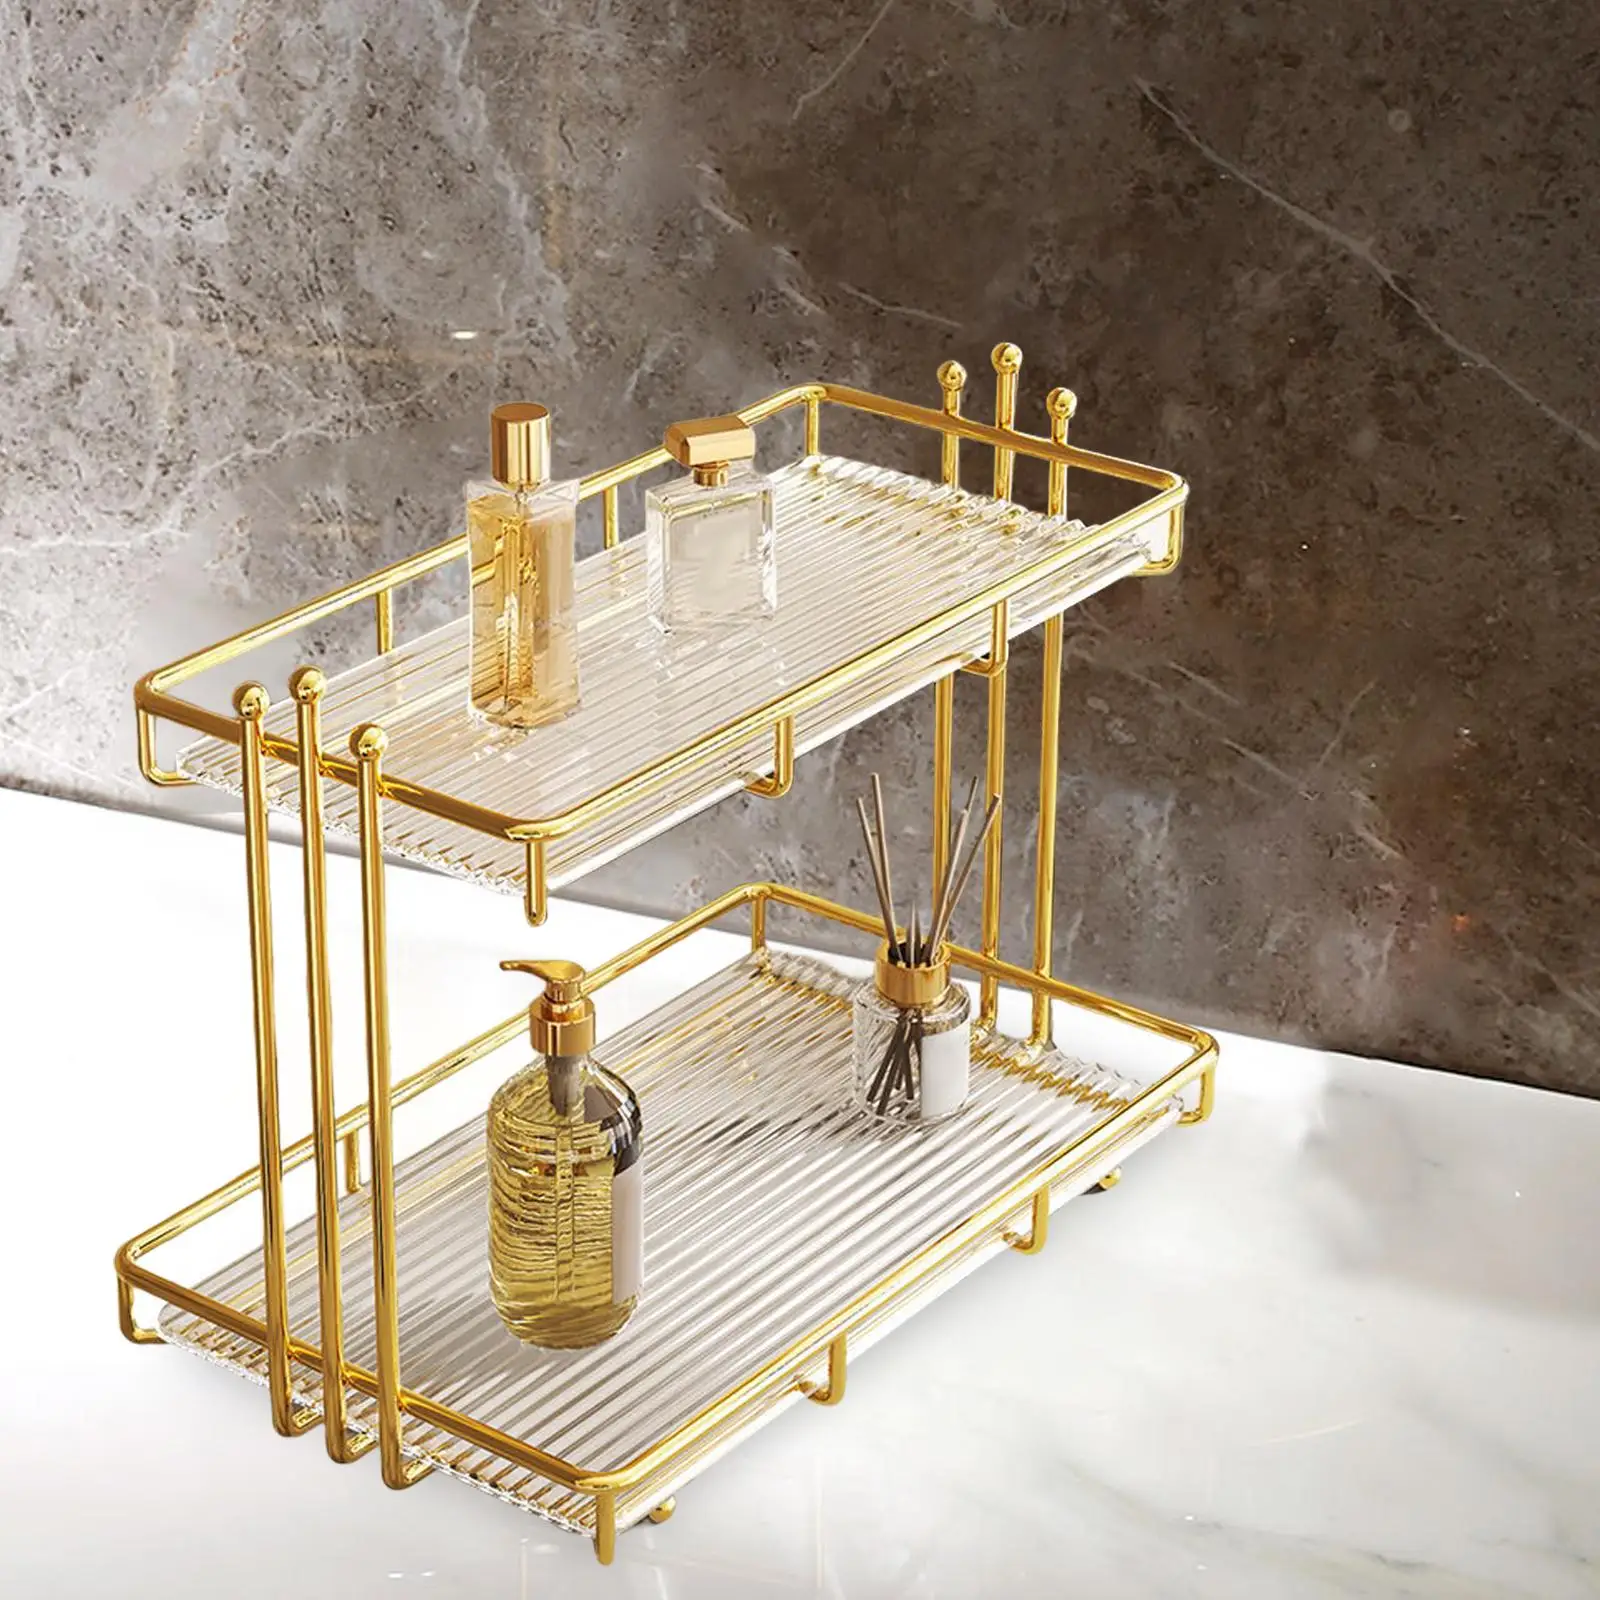 Gold Makeup Organiser Storage Jewelry Holder Cosmetics Holder Souvenir Stand Shelf Display for Dresser Desk Necklace Bathroom